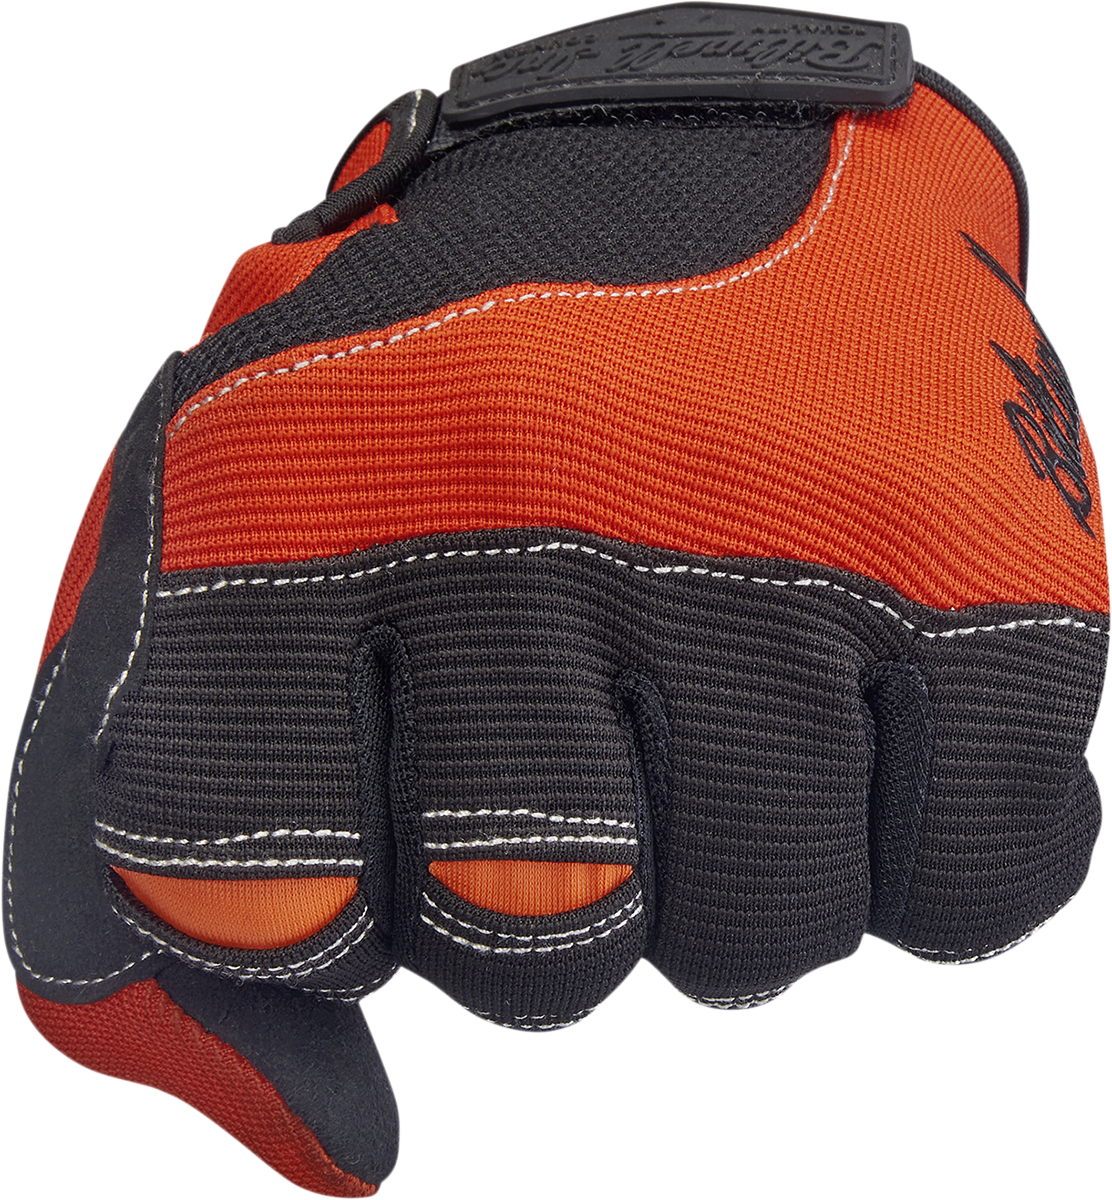 BILTWELL Moto Gloves - Orange/Black